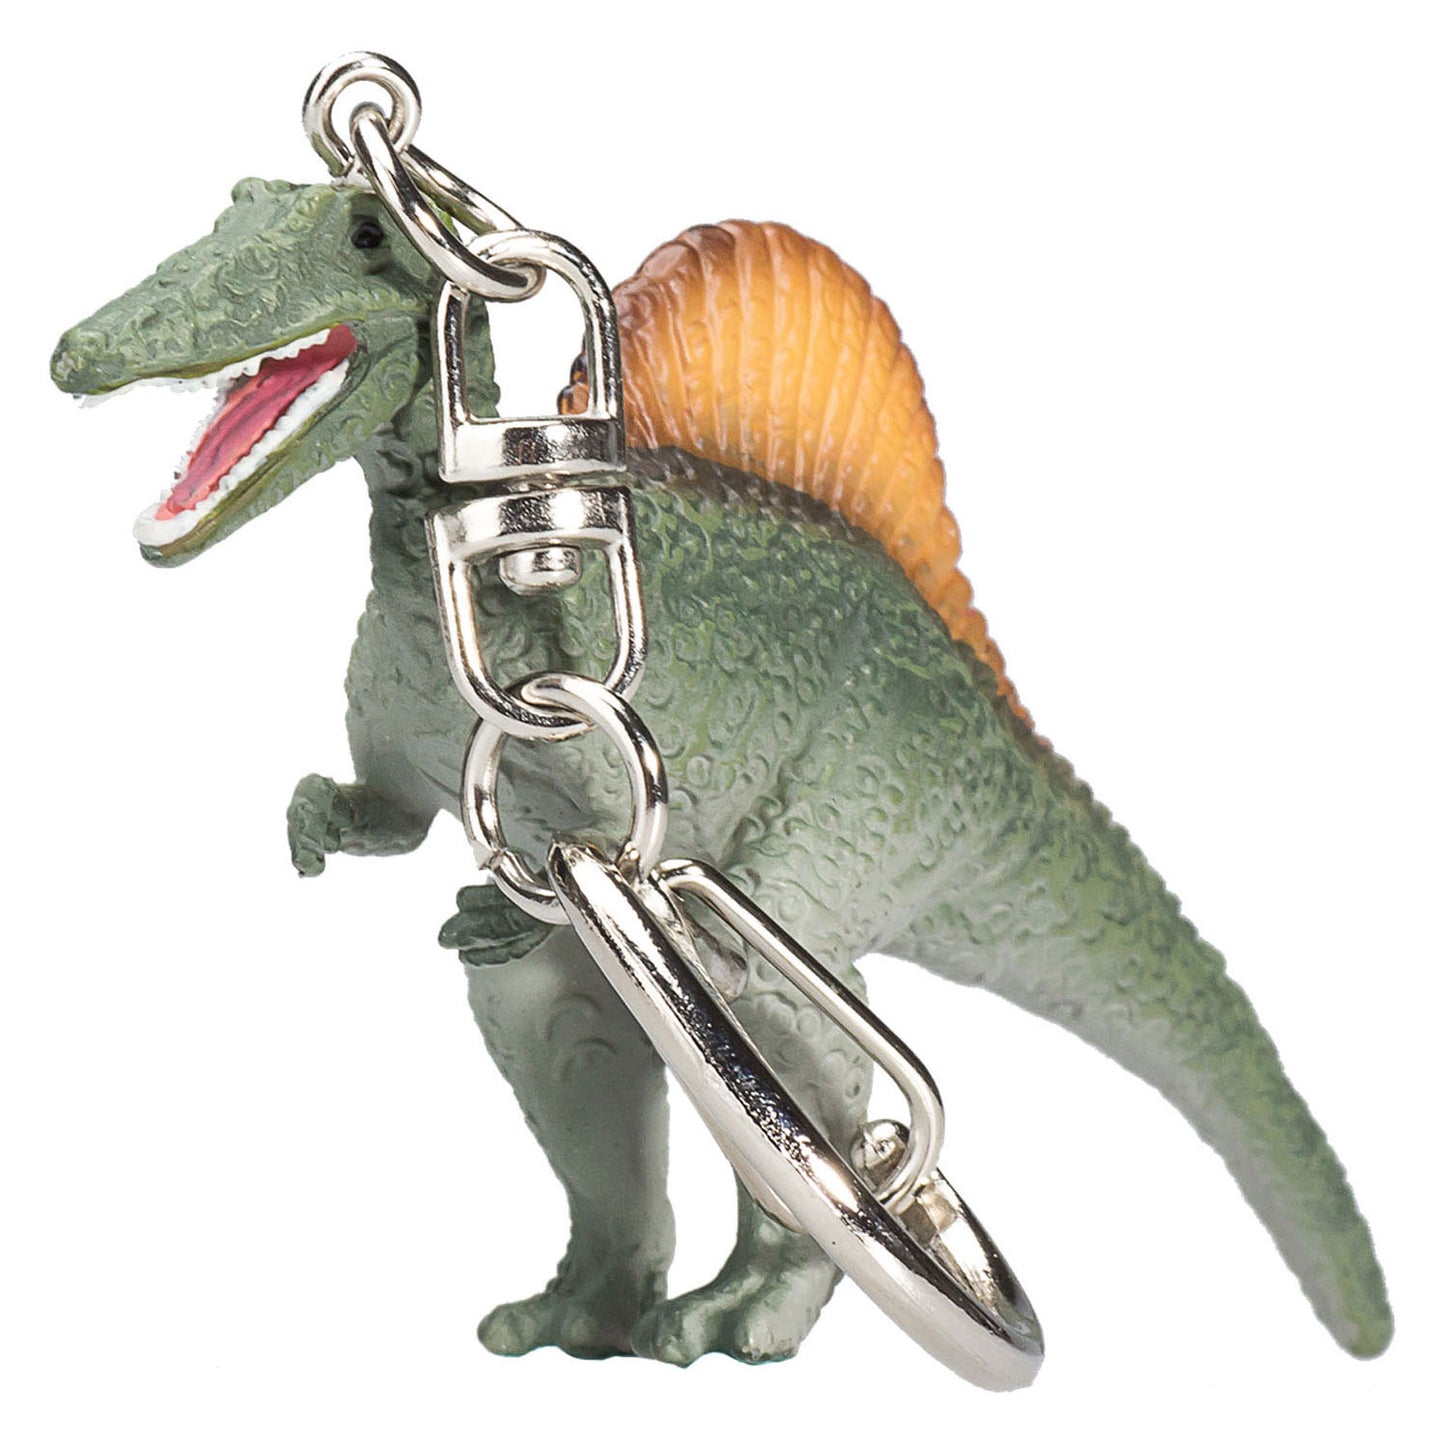 Mojo Key Ring Spinosaurus 387452